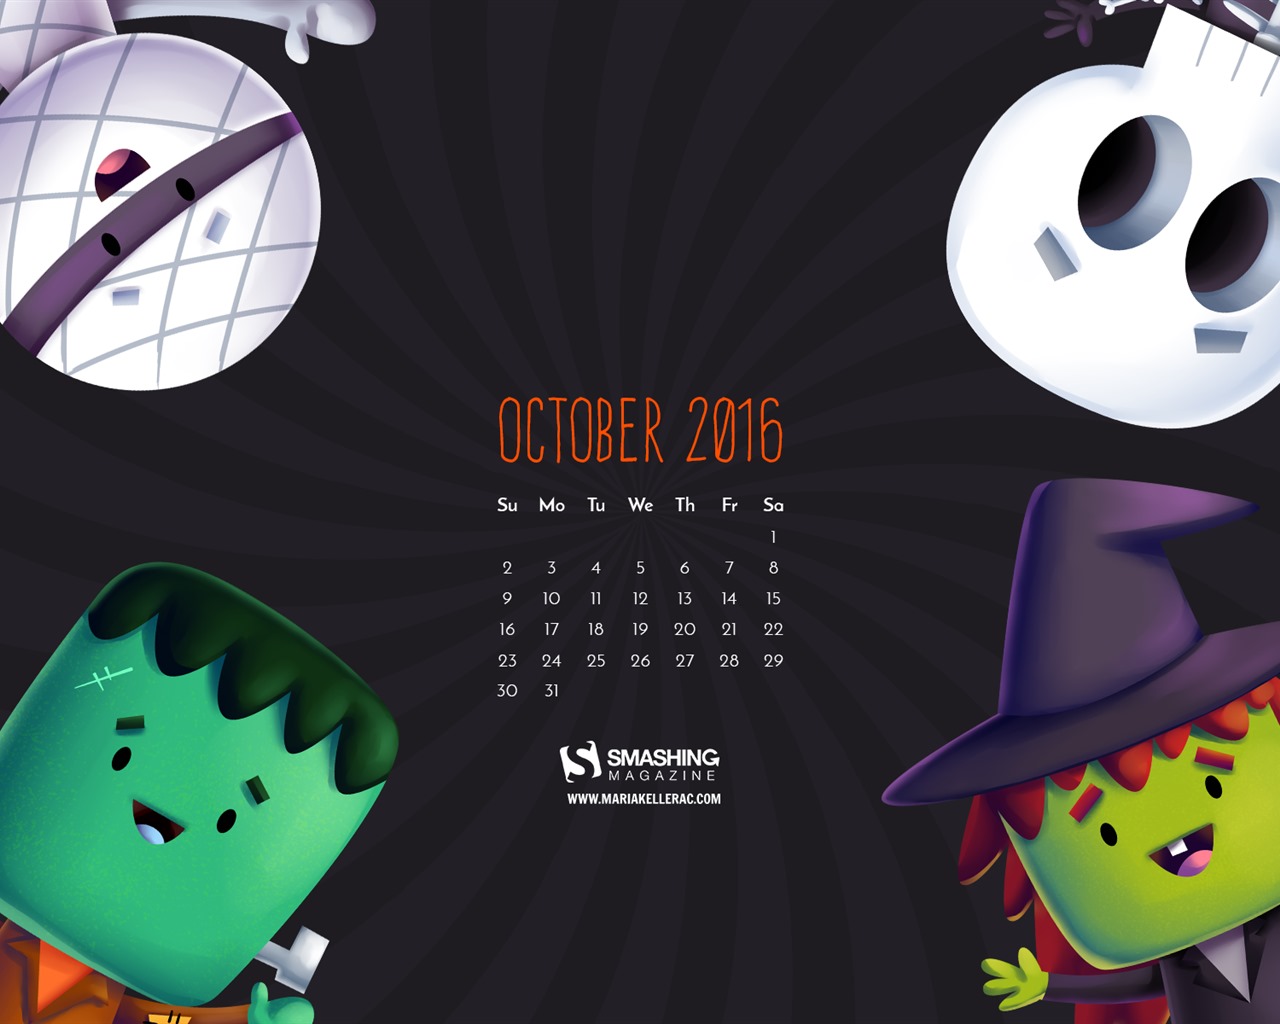 October 2016 calendar wallpaper (2) #6 - 1280x1024